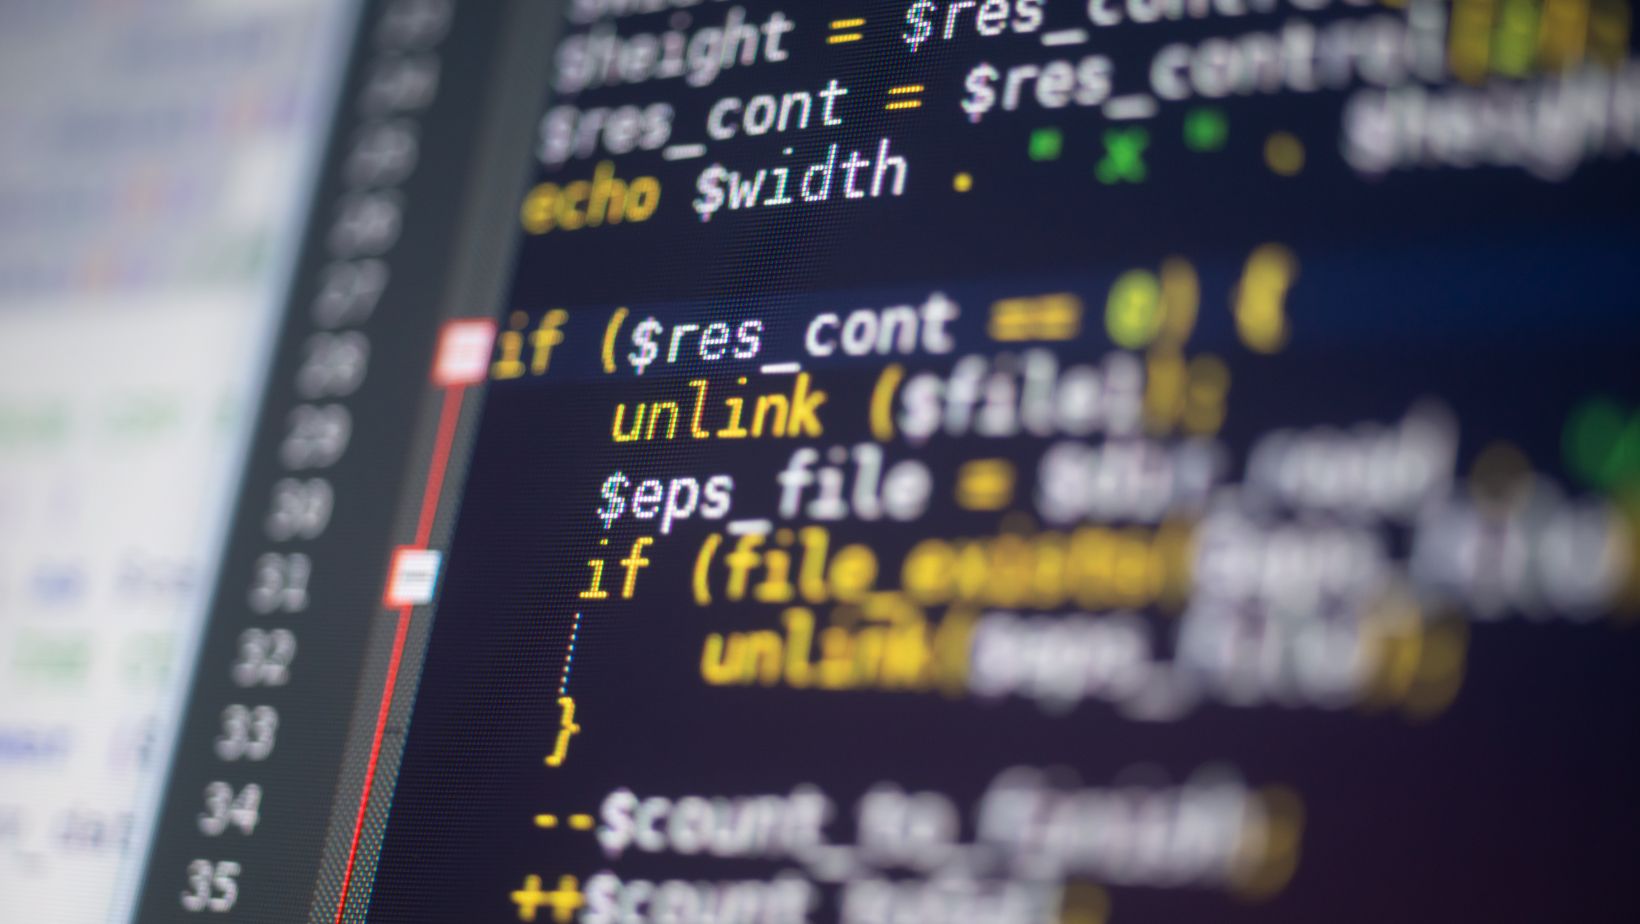 what programming languages did bill gates develop?